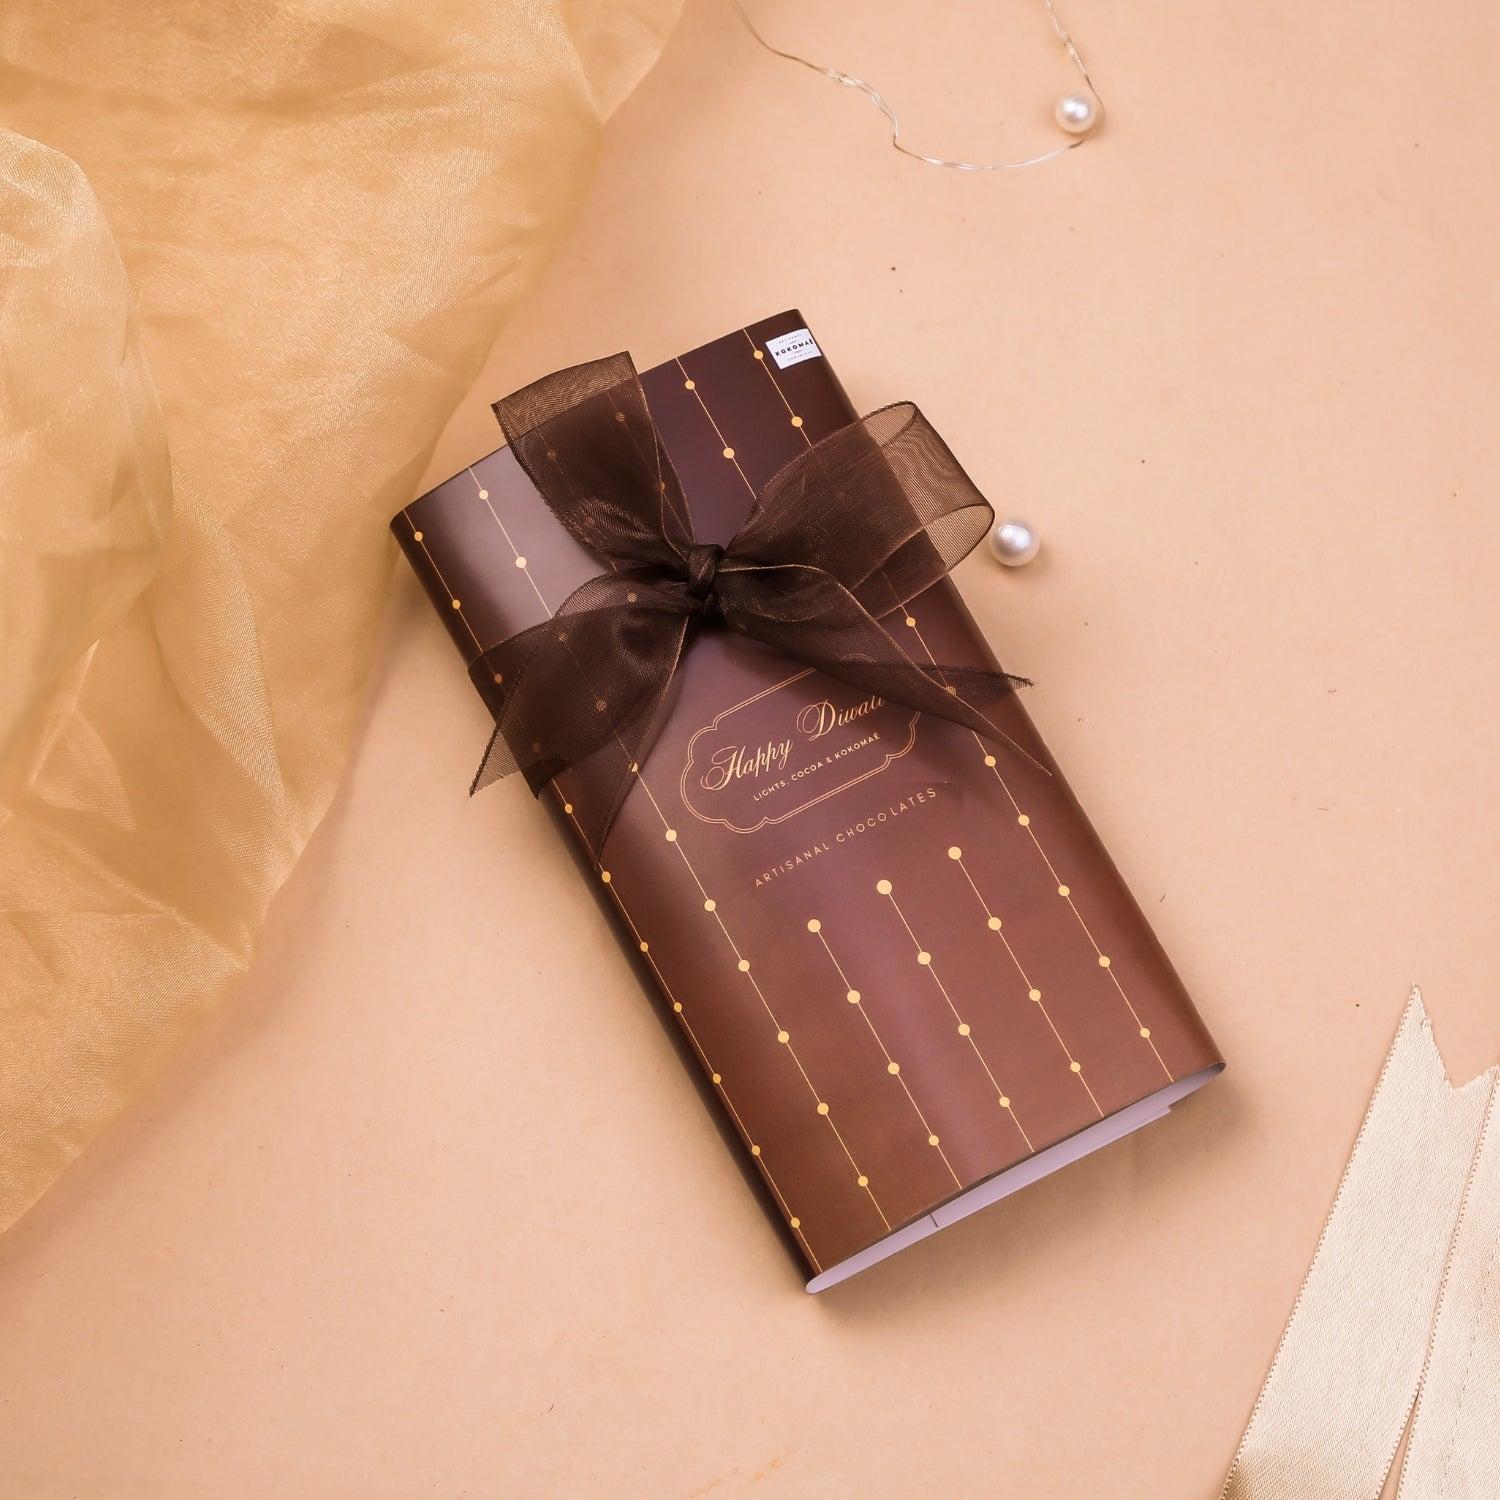 Kokomaē Premium Diwali Chocolate Offering : 72% Dark with Coffee & 80% Dark with a Candle